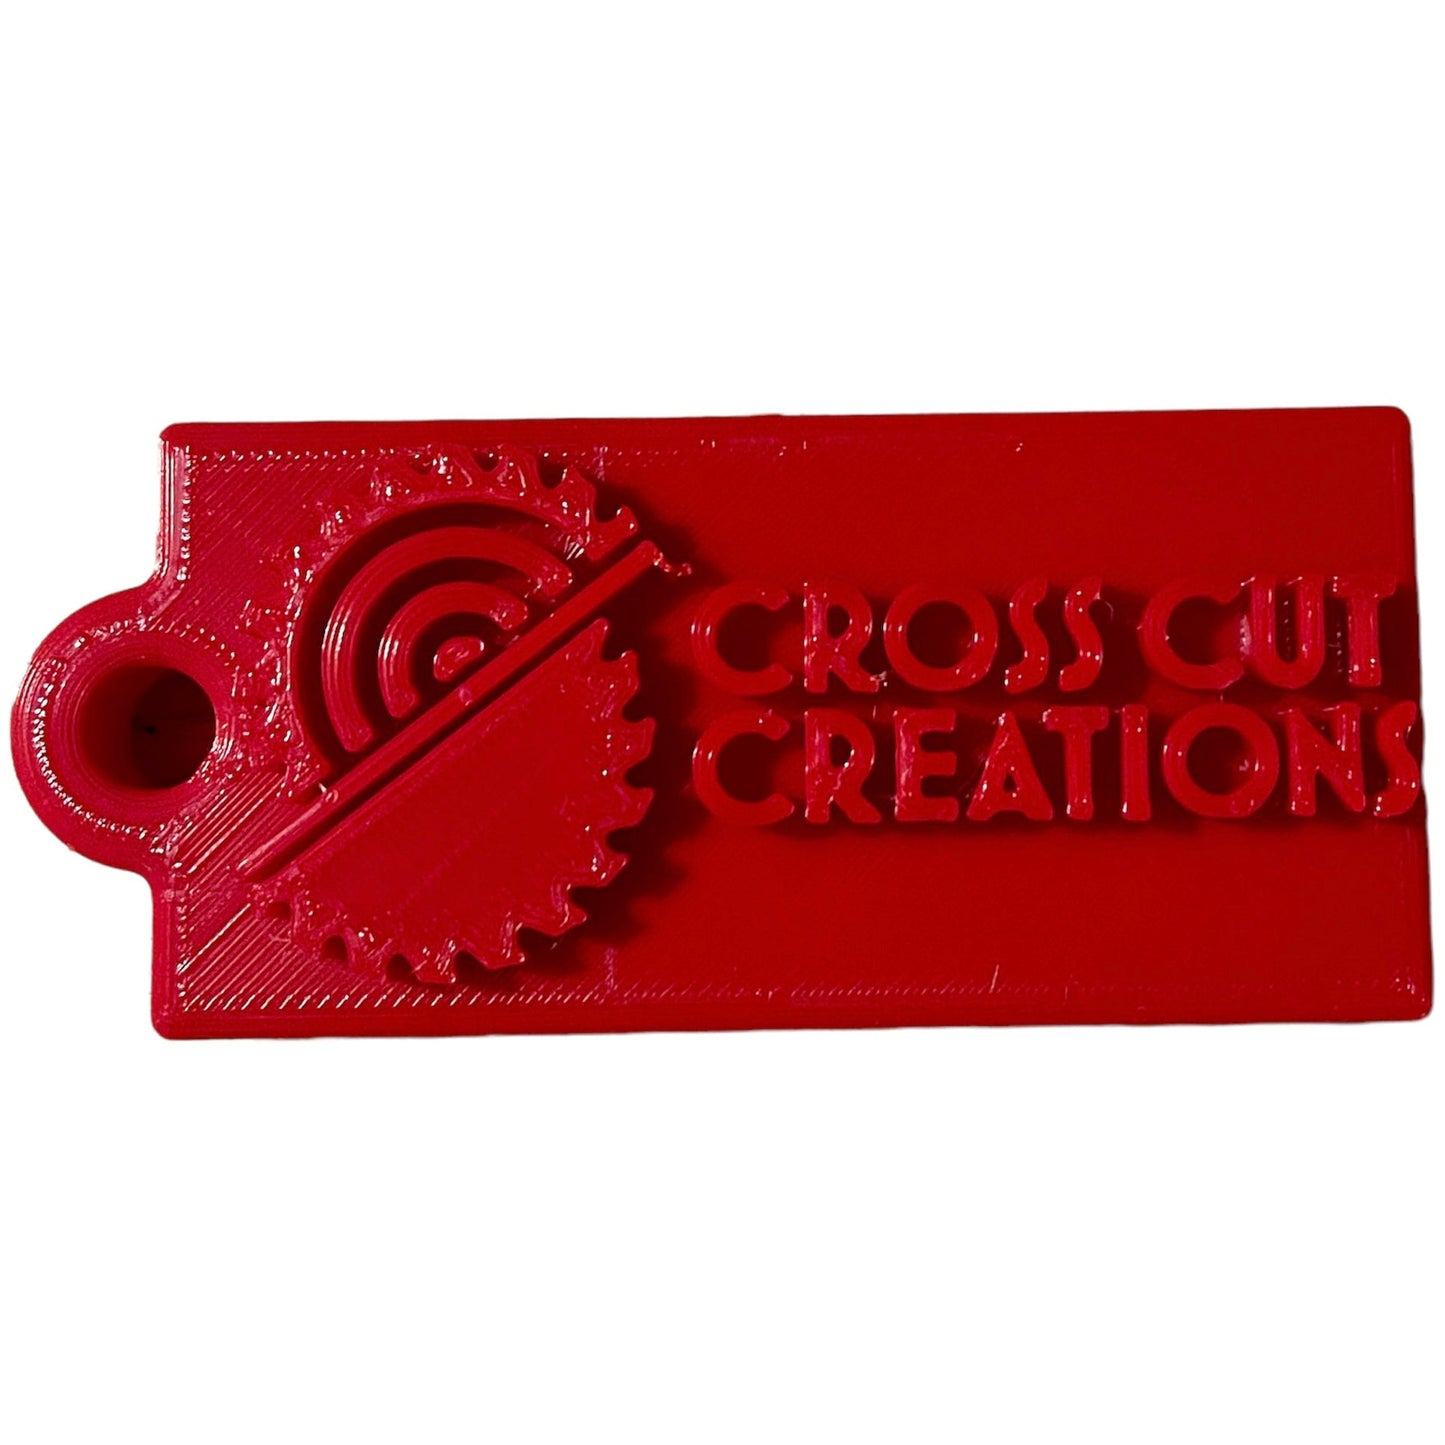 3D Printed Merch - Cross Cut Creations